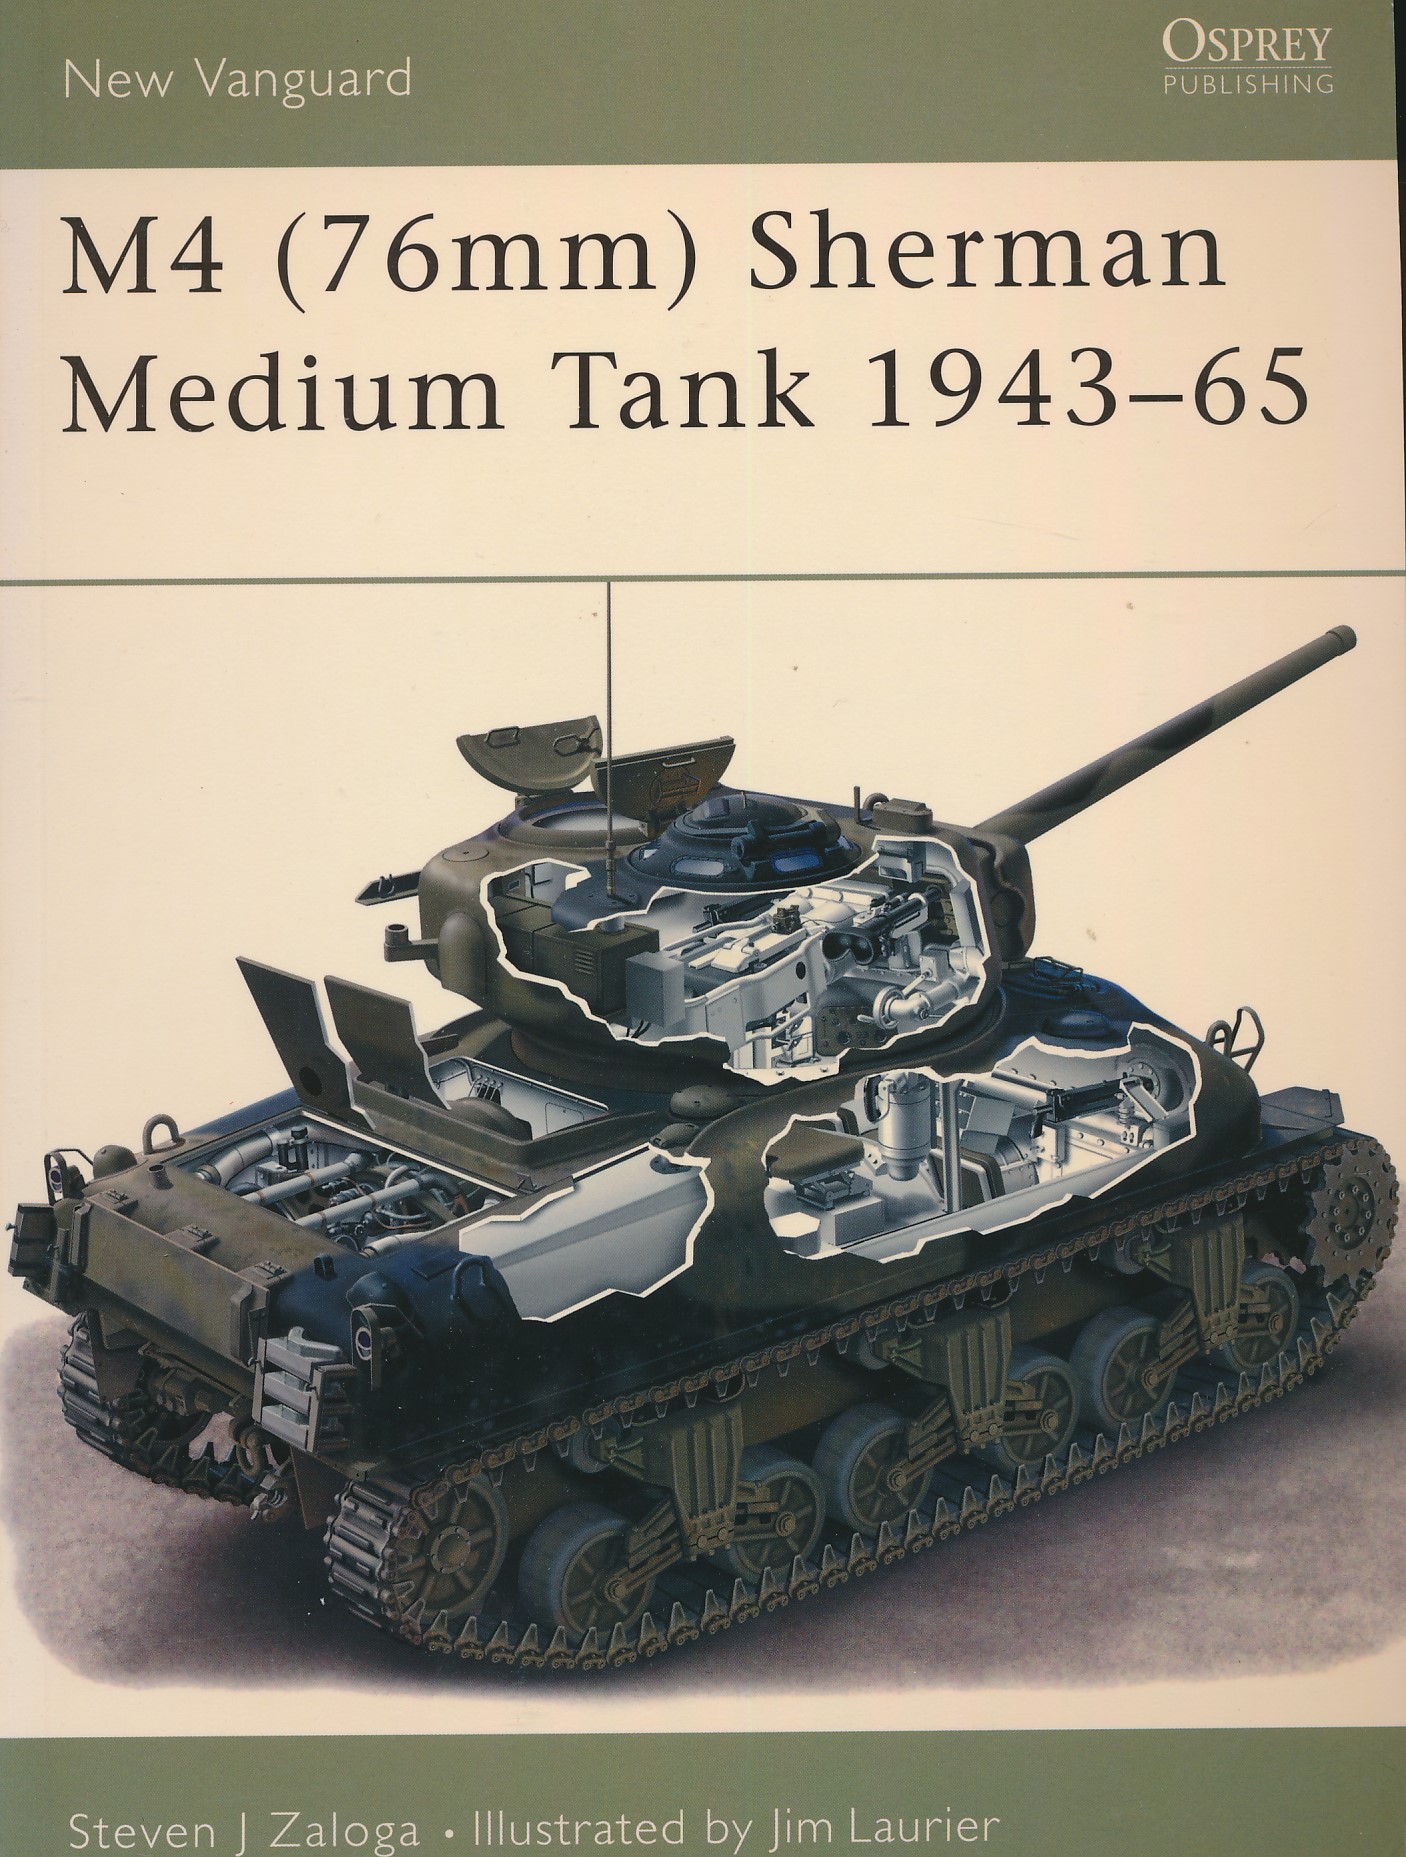 M4 (76mm) Sherman Medium Tank 1943-65. Osprey New Vanguard Series No. 73.